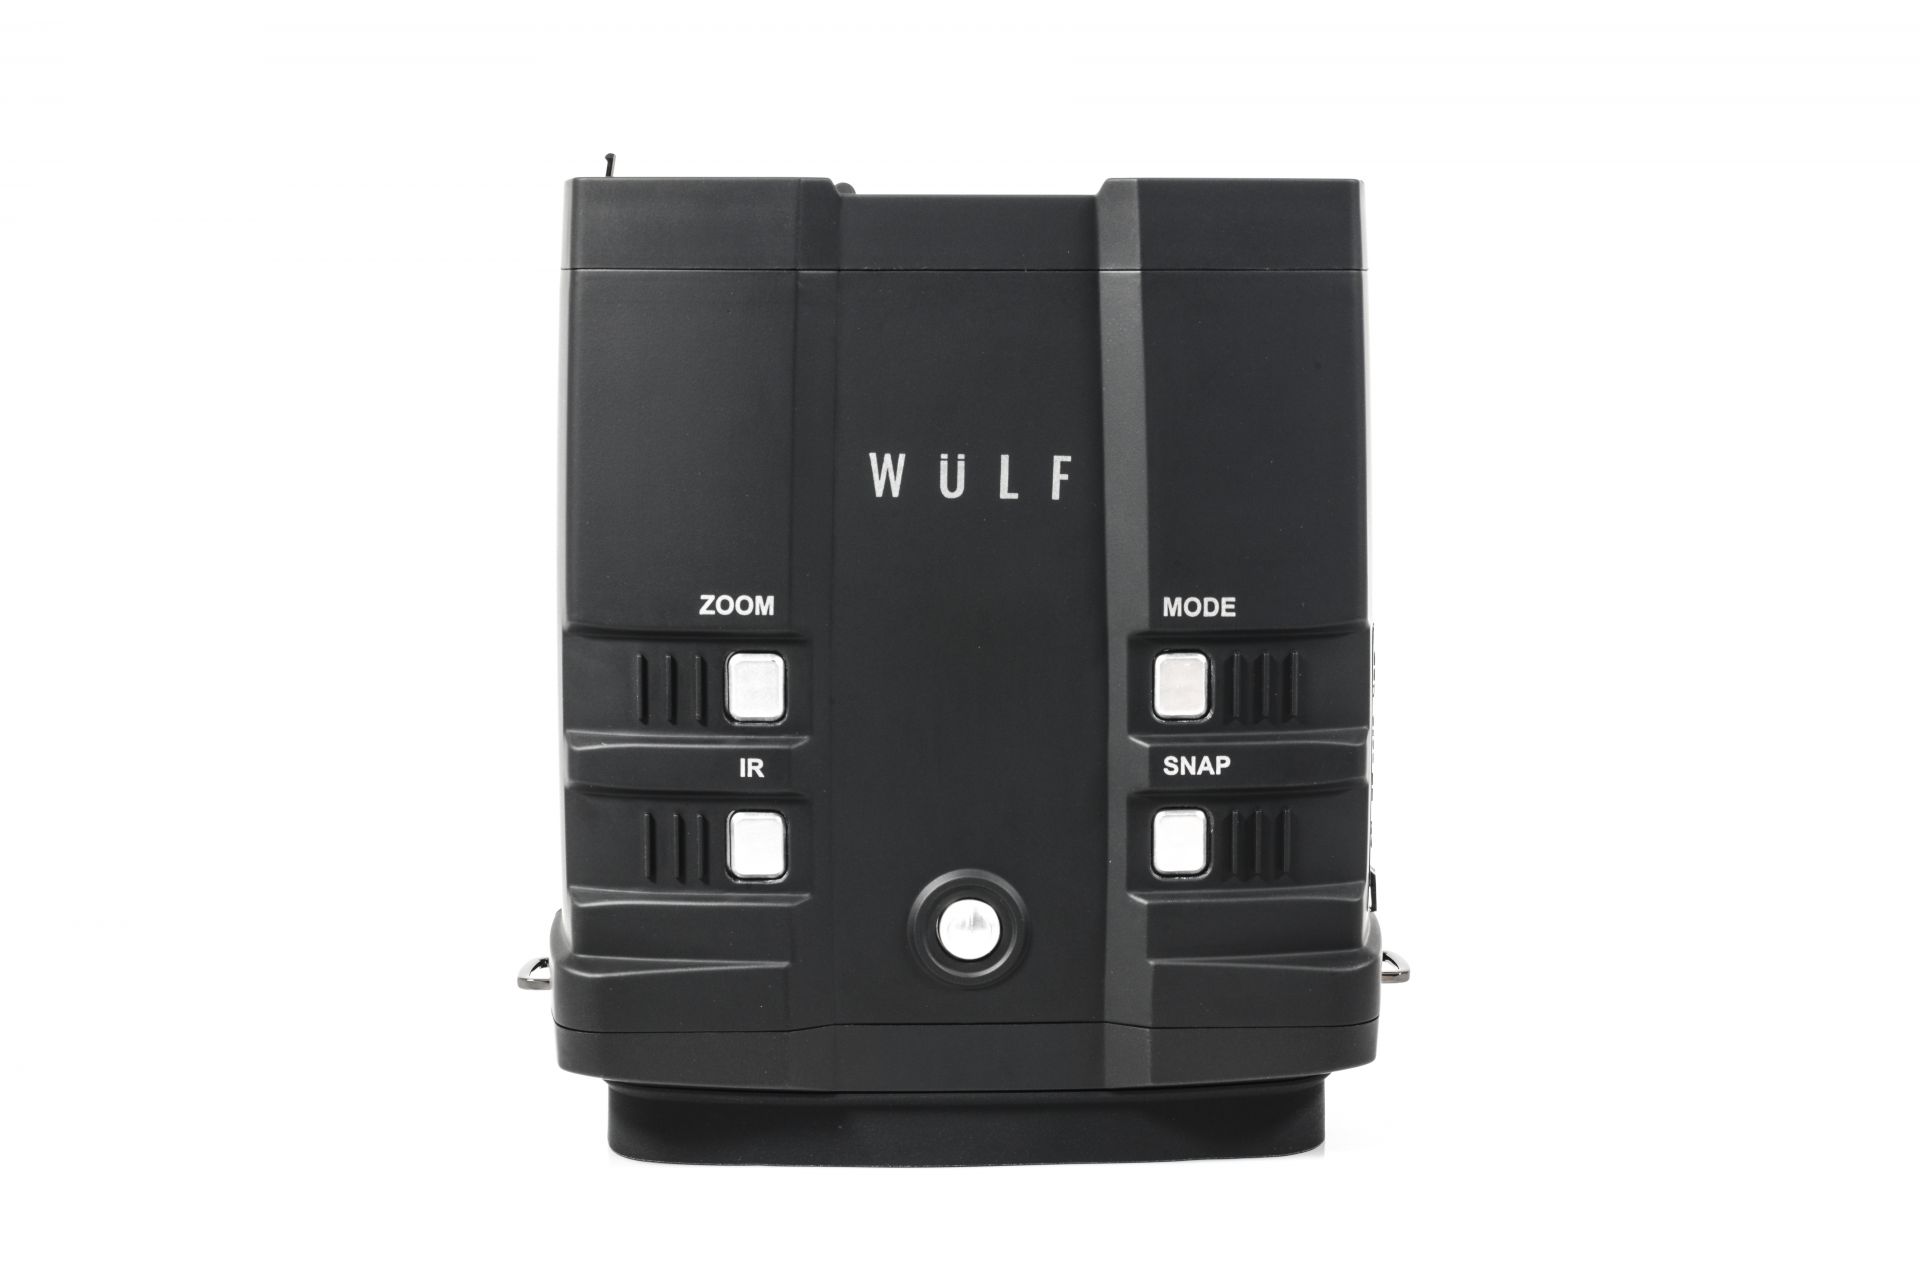 Wulf Night Vision Binocular Full HD